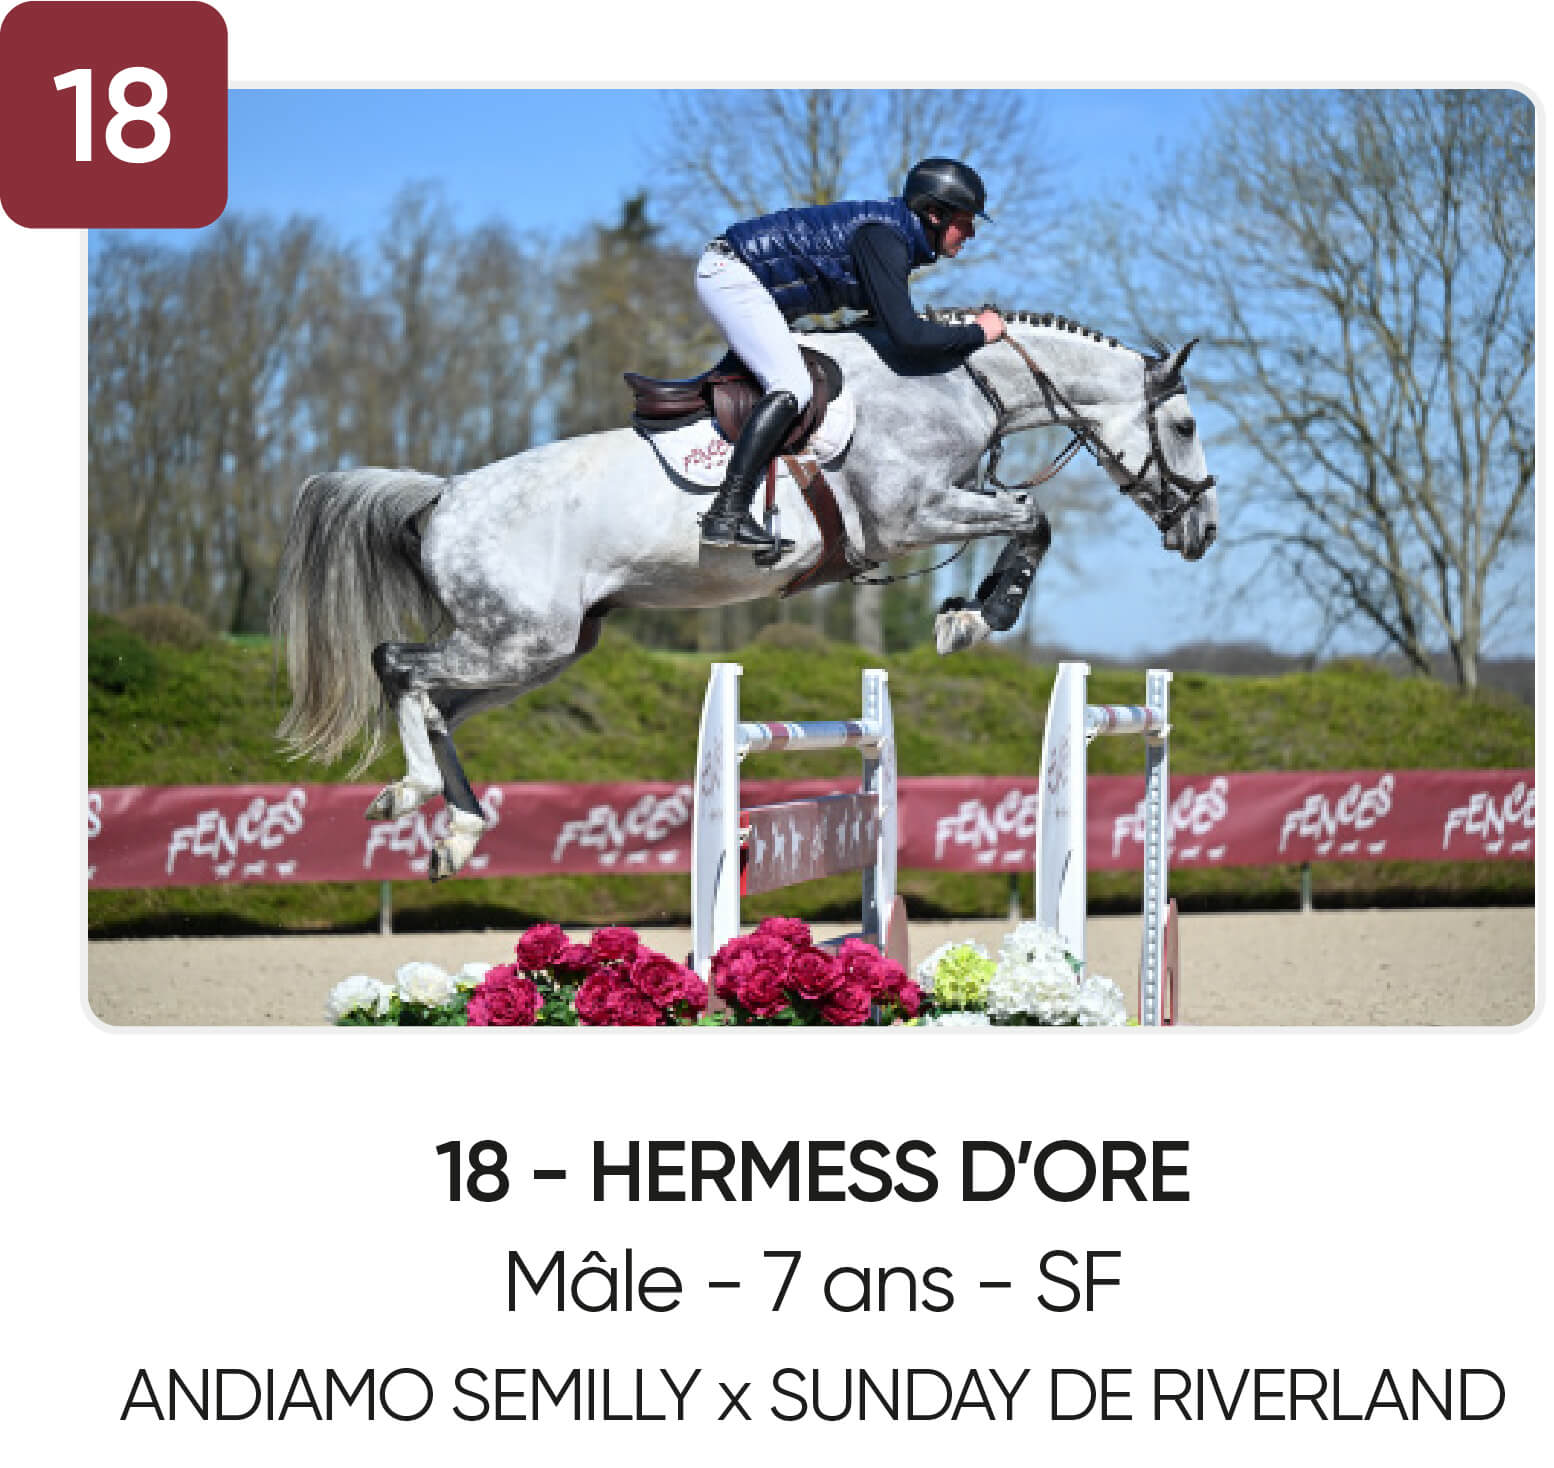 18 - HERMESS D'ORE